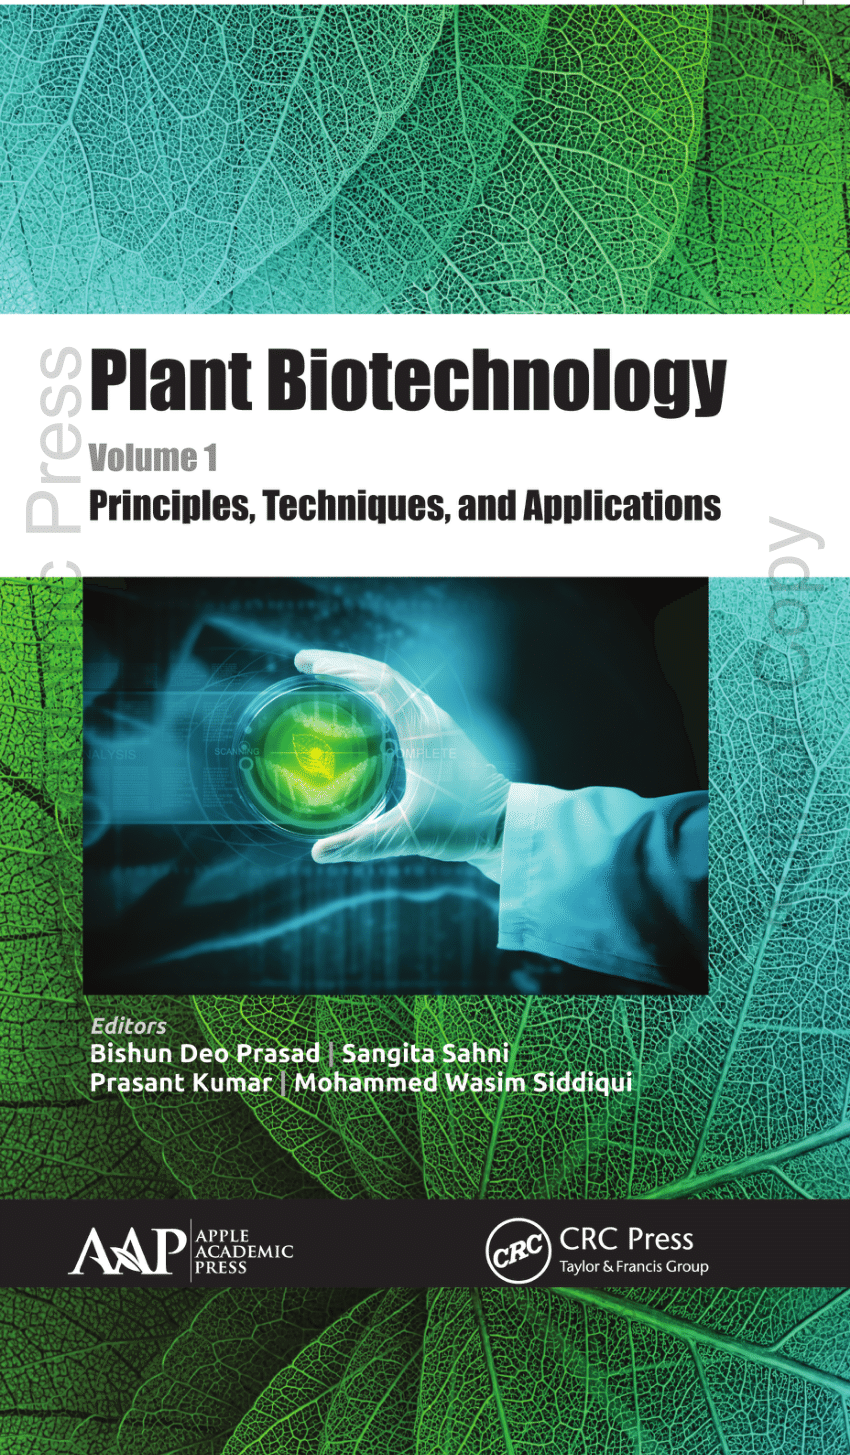 (PDF) Plant Biotechnology Volume 1 Principles, techniques and